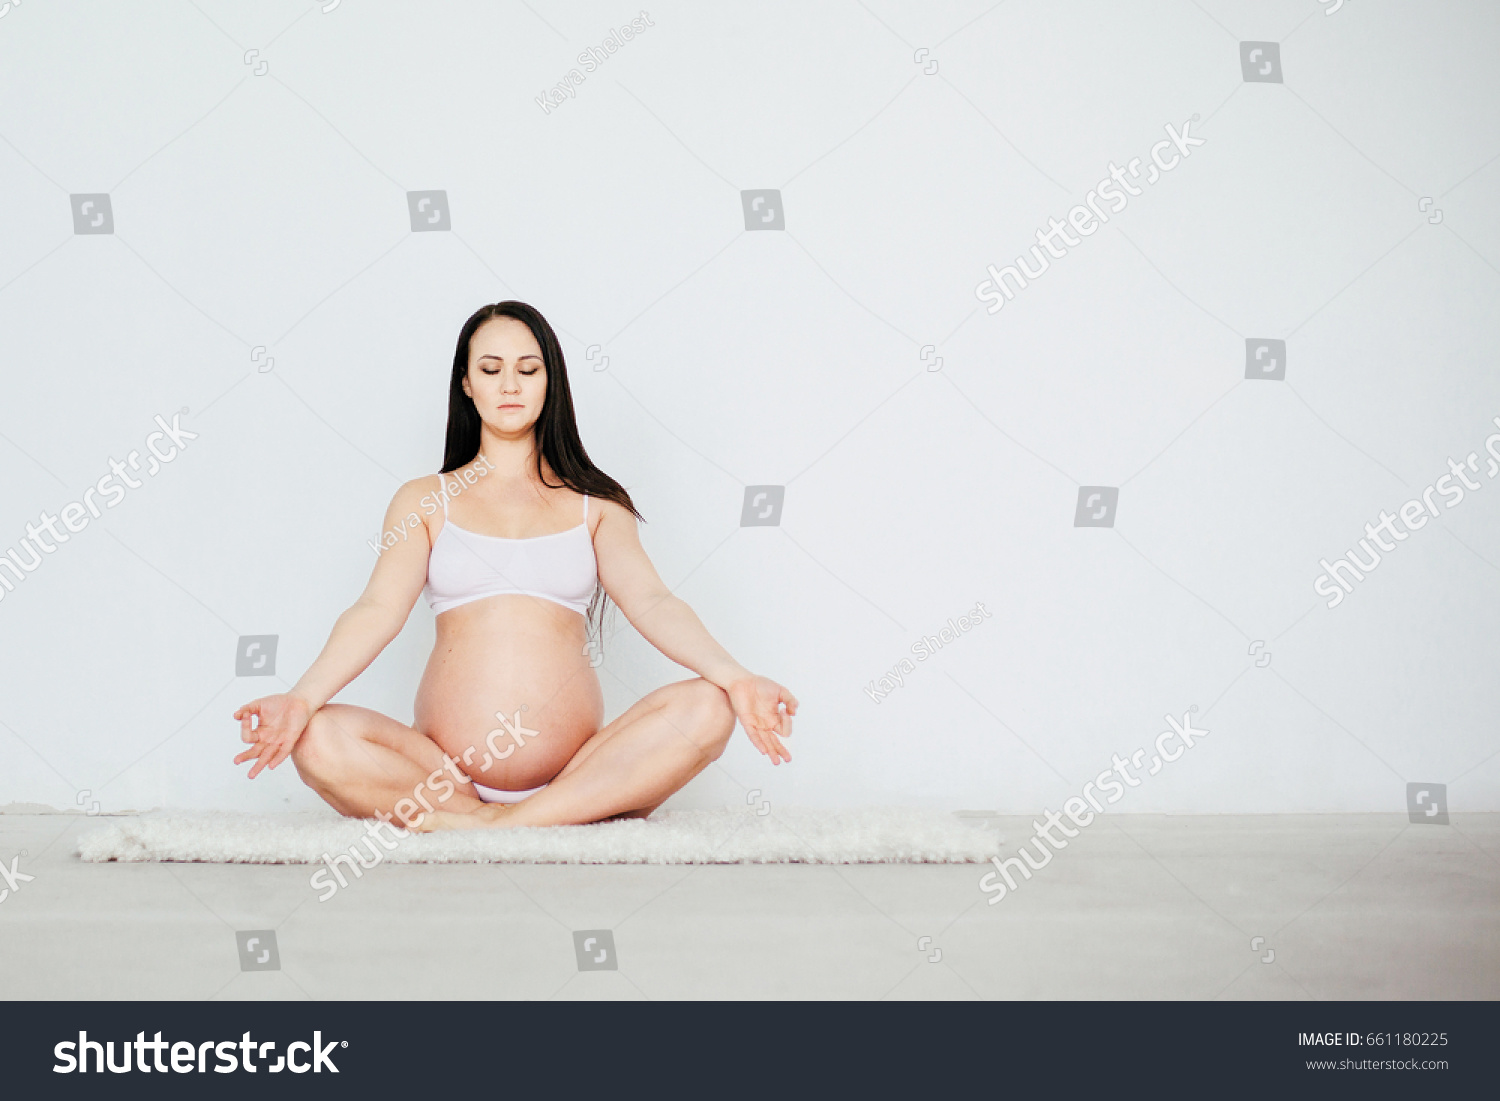 Beautiful pregnant woman doing prenatal yoga exercises - lotos pose, healthy  lifestyle concept #661180225